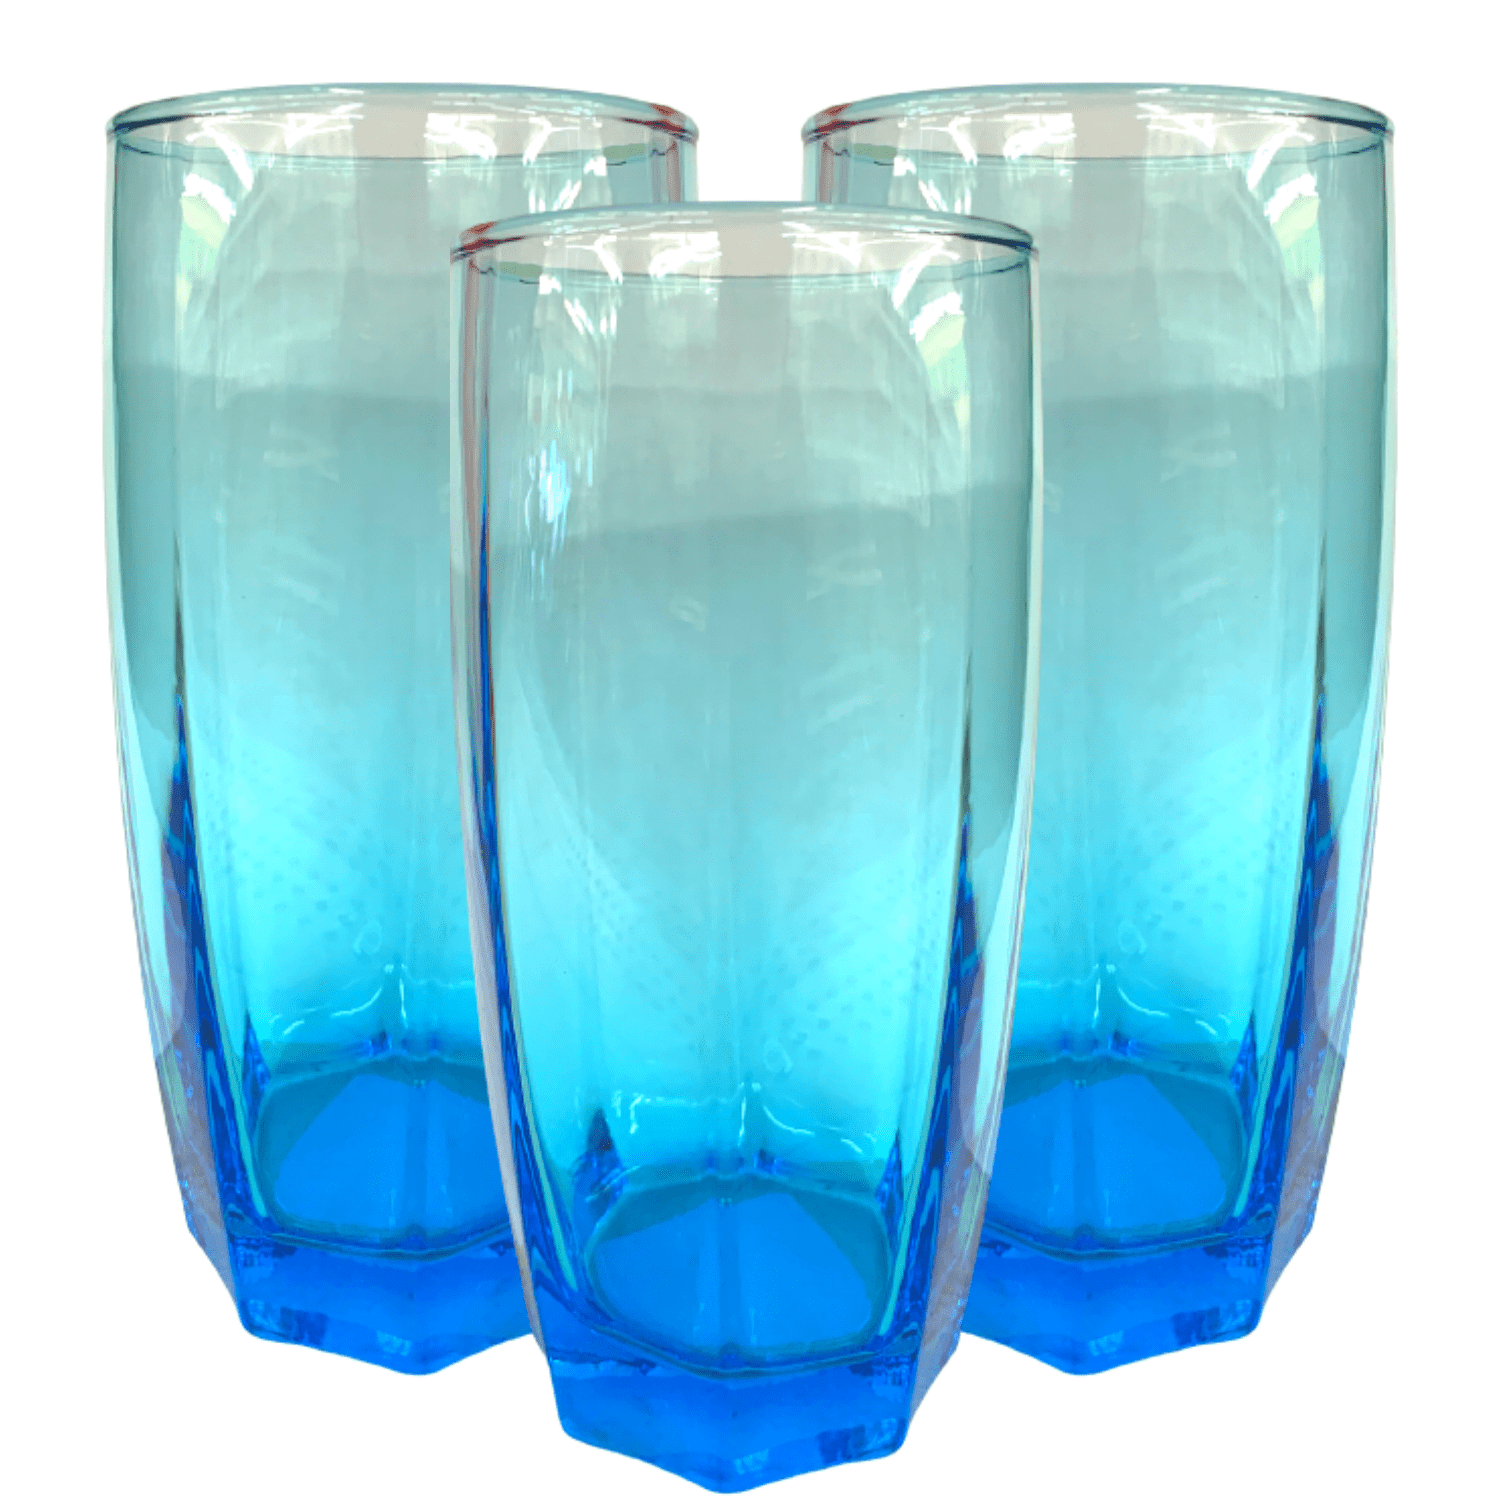 drinking-glasses-16-oz-sky-blue-6-glass-tumblers-2-pack-walmart-walmart